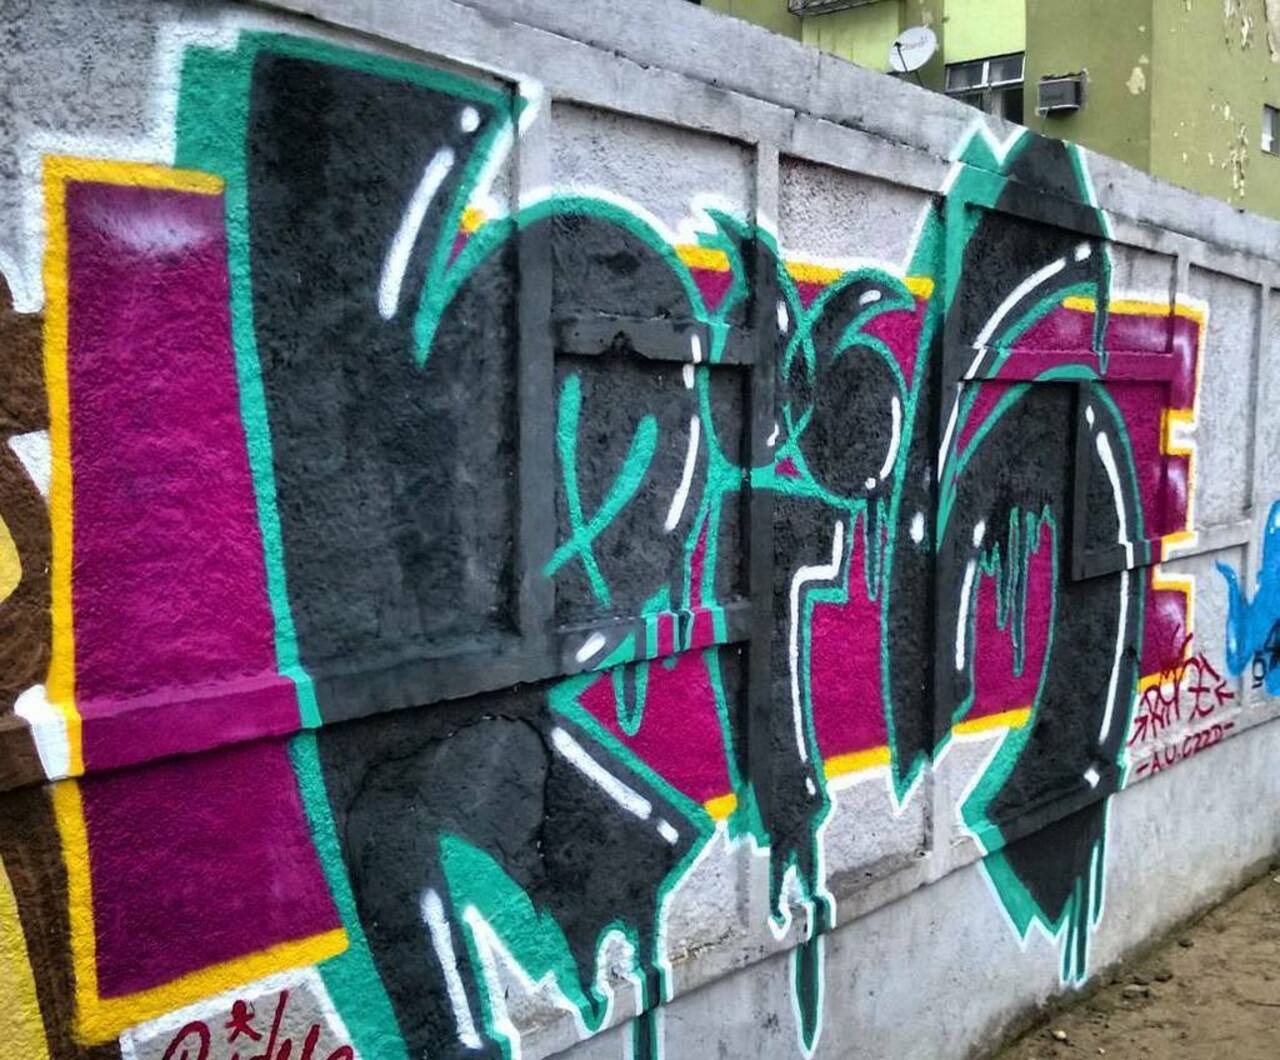 Rine #graffiti #streetartrio #artistasurbanoscrew #rjvandal #streetart by artistasurbanoscrew http://t.co/DnWf7X7IUc